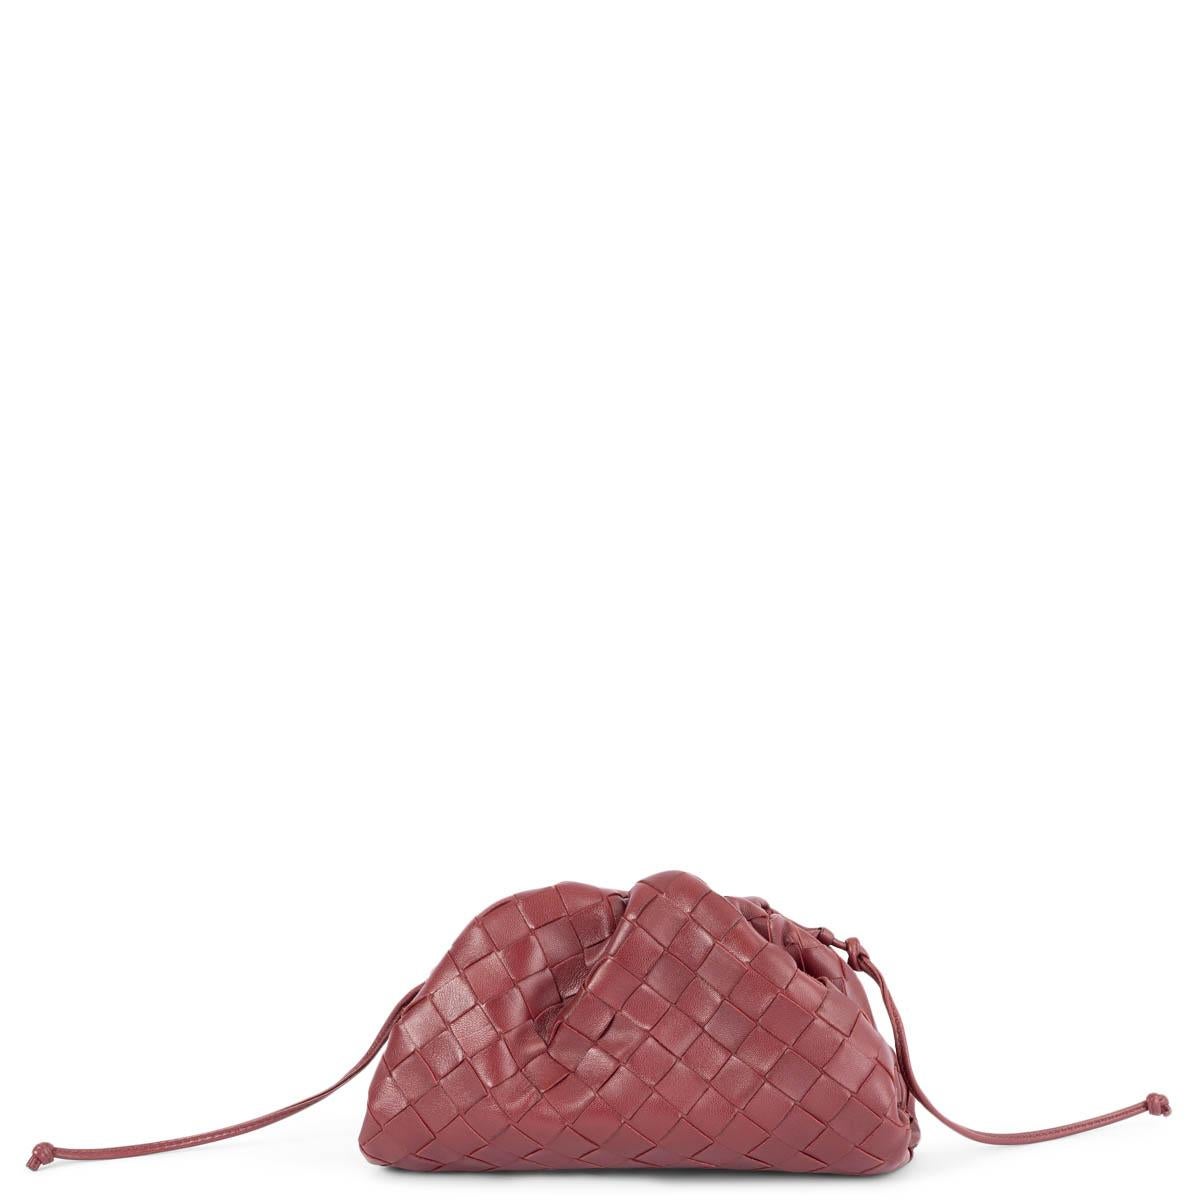 BOTTEGA VENETA burgundy Intrecciato leather MINI POUCH Crossbody Bag